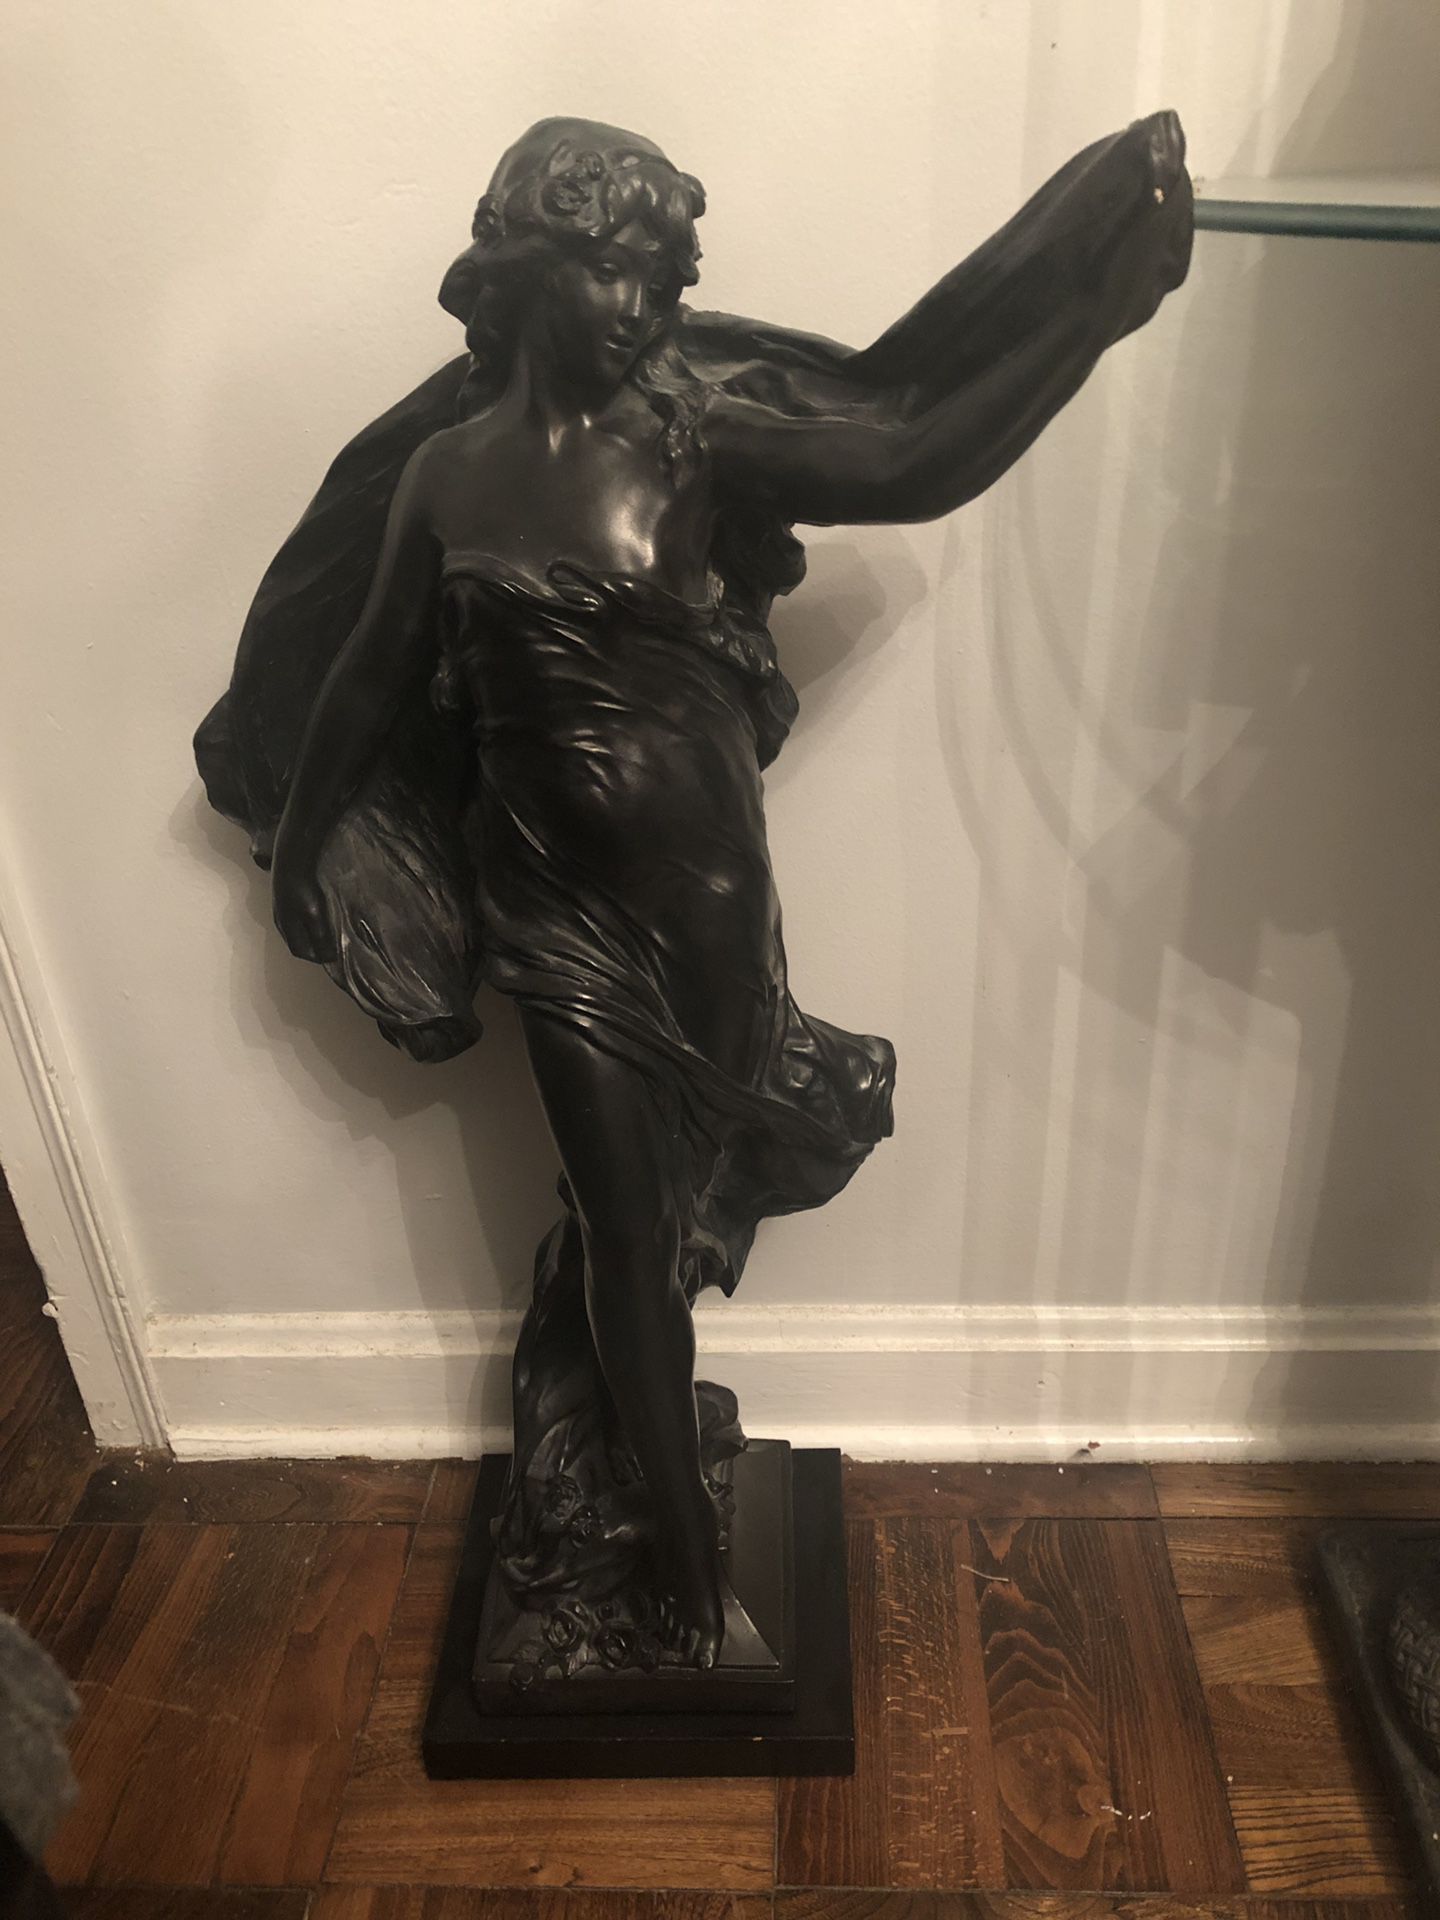 Black statue